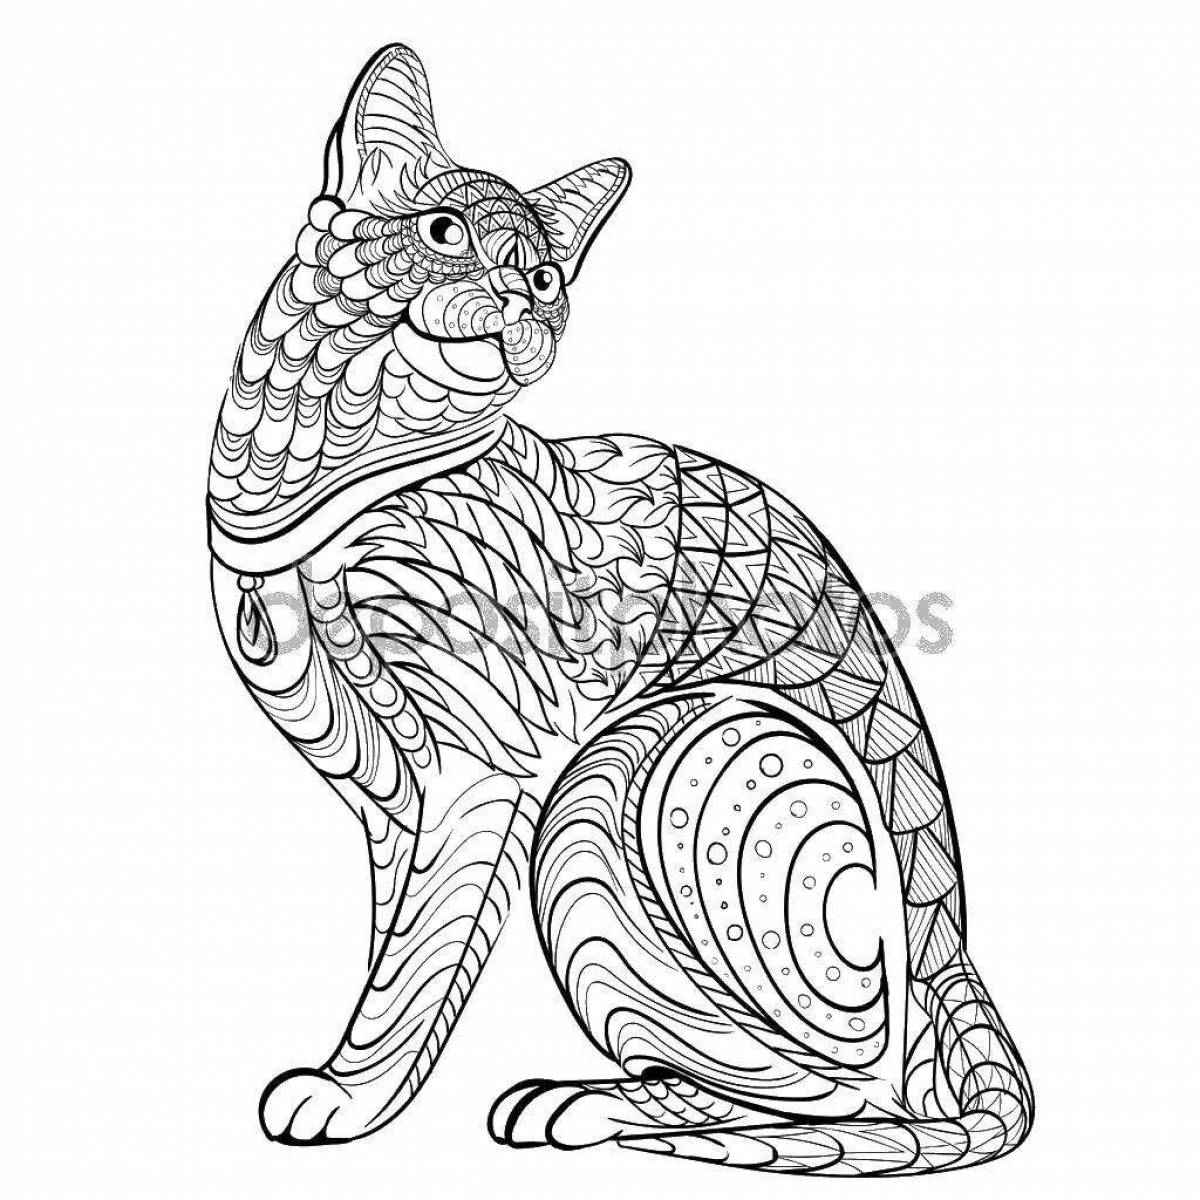 Wonderful cat spiral coloring